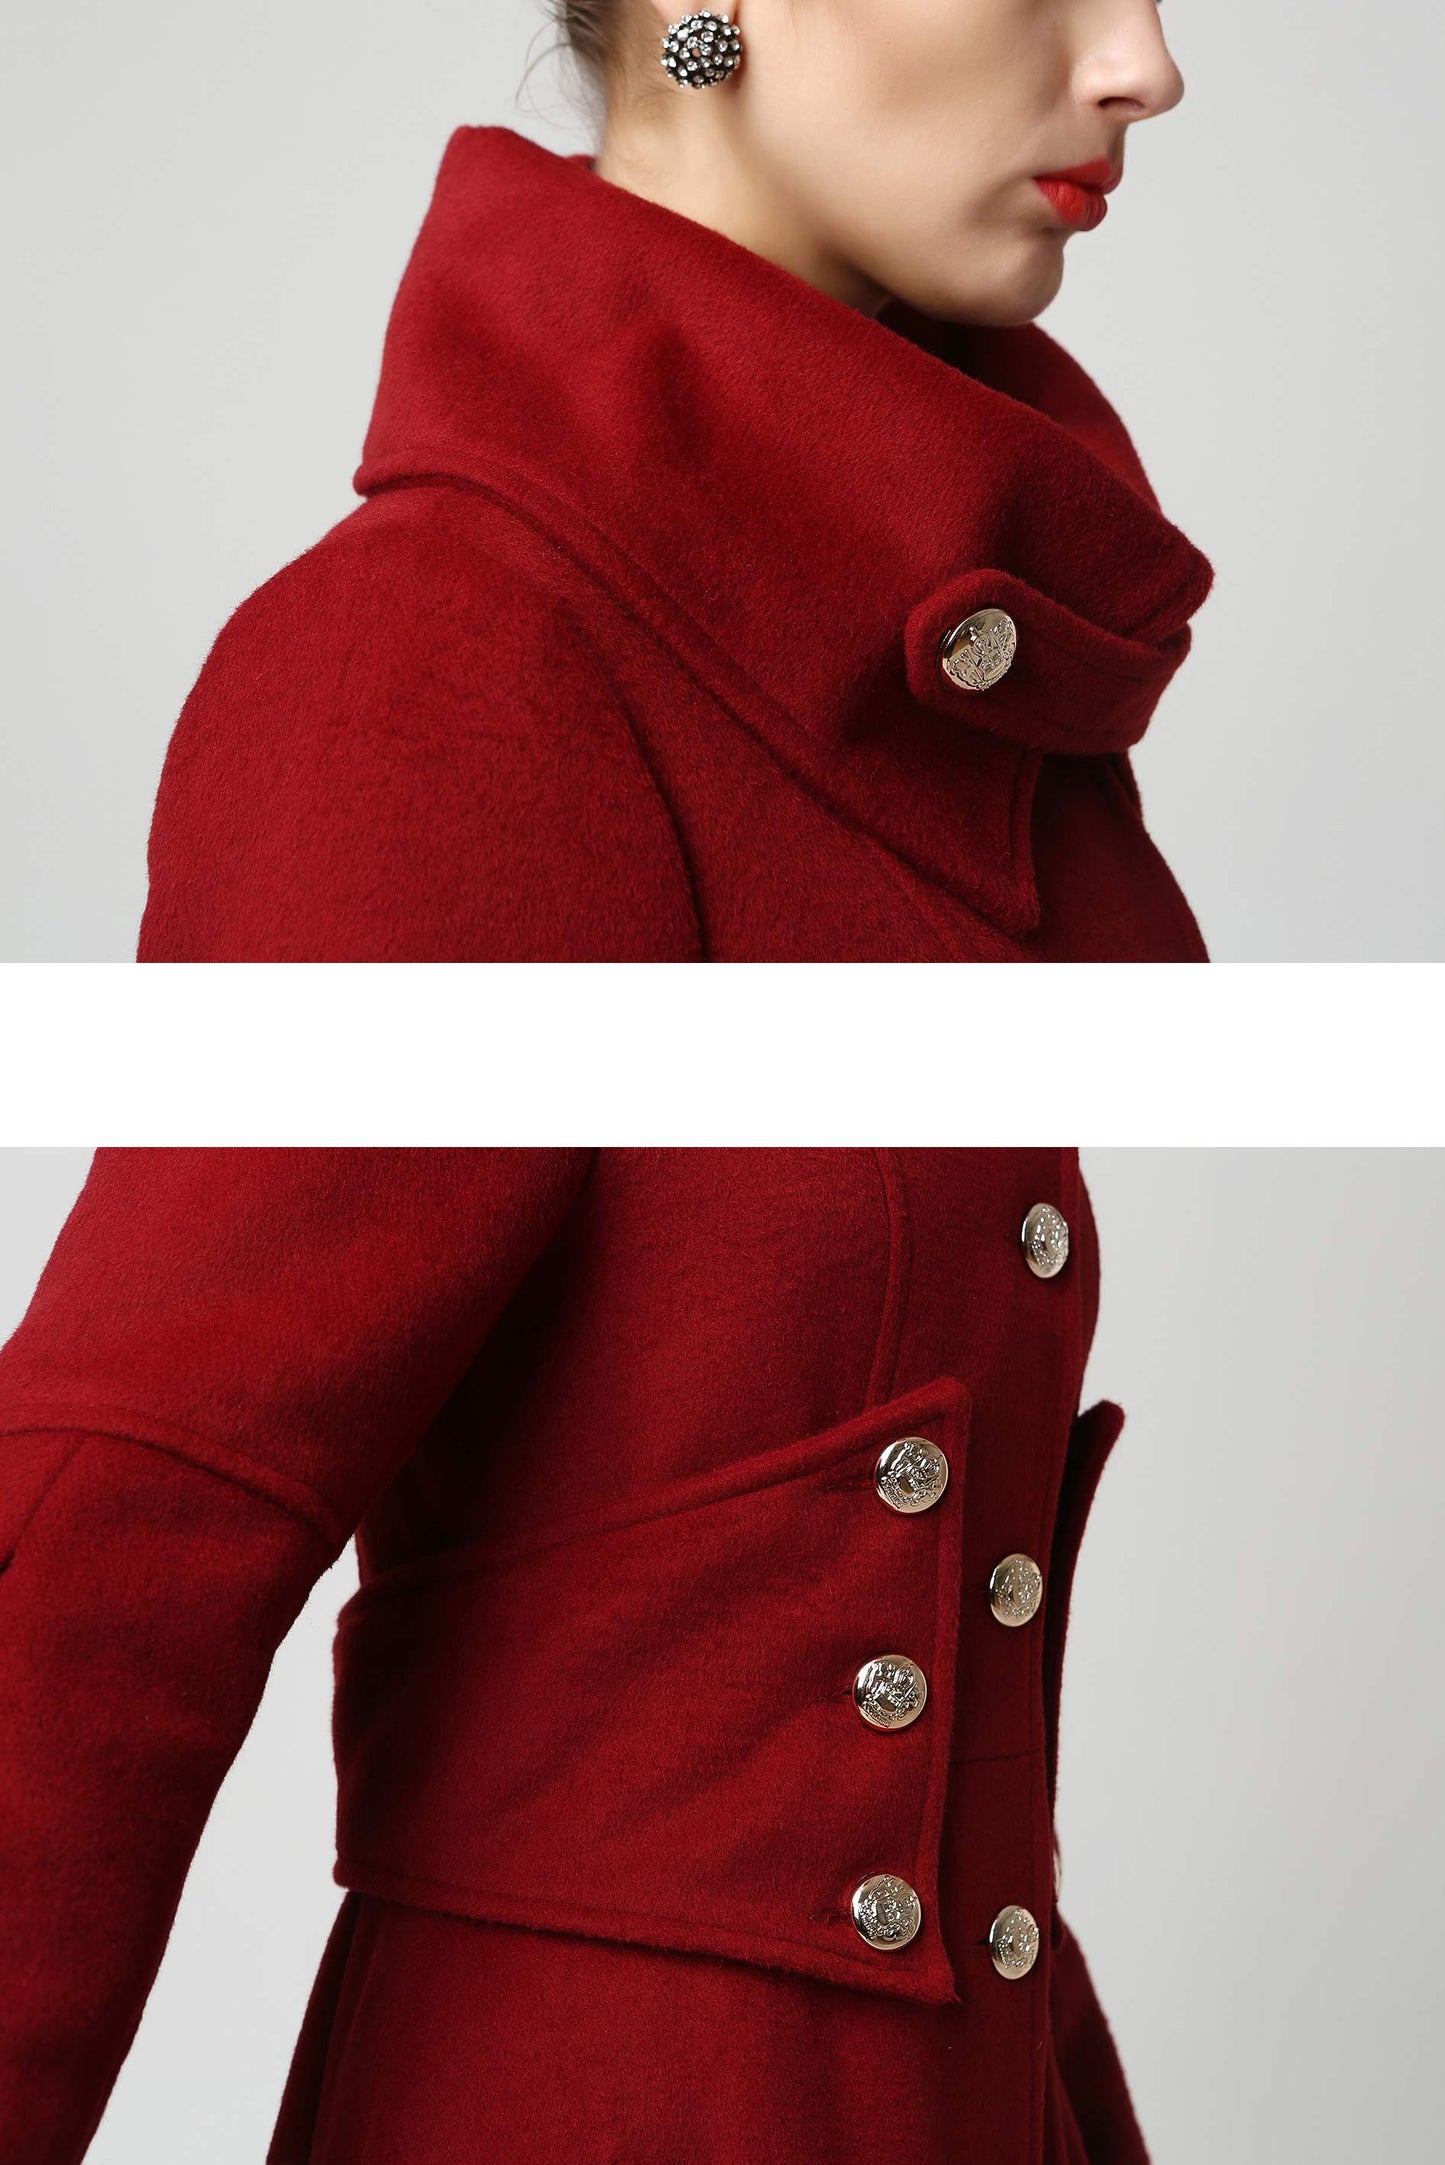 Military wool Coat for women, Elegant maxi long coat 1118#